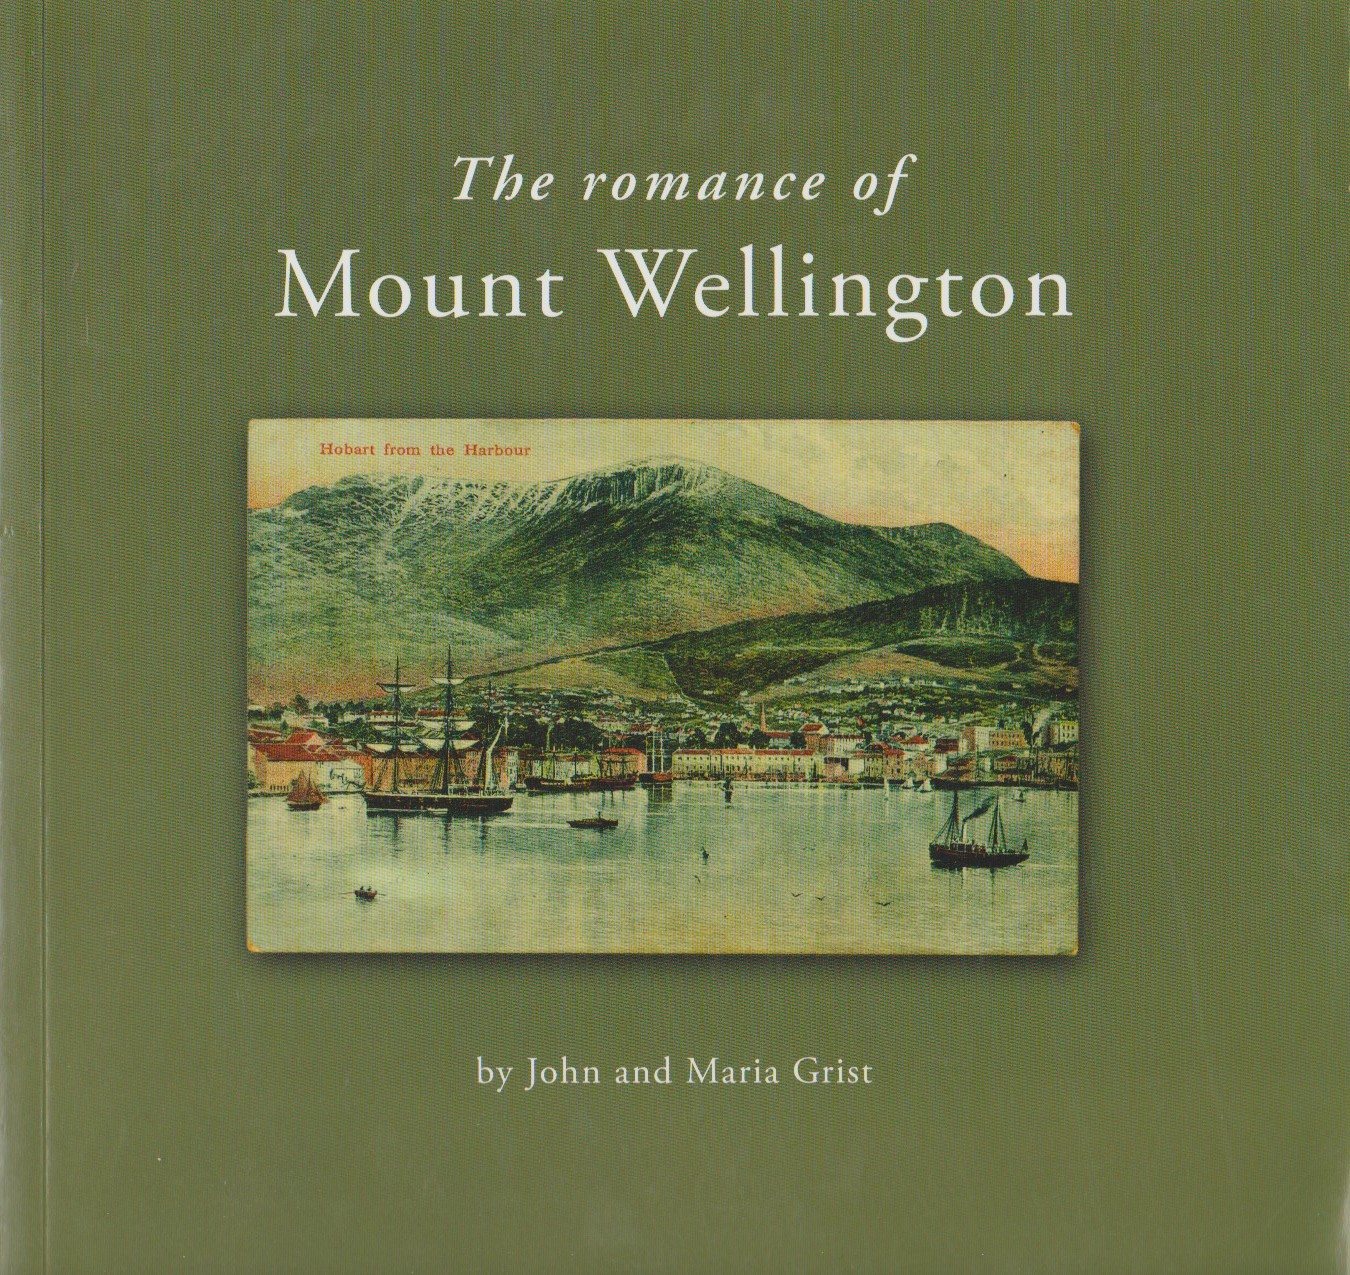 The Romance of Mount Wellington